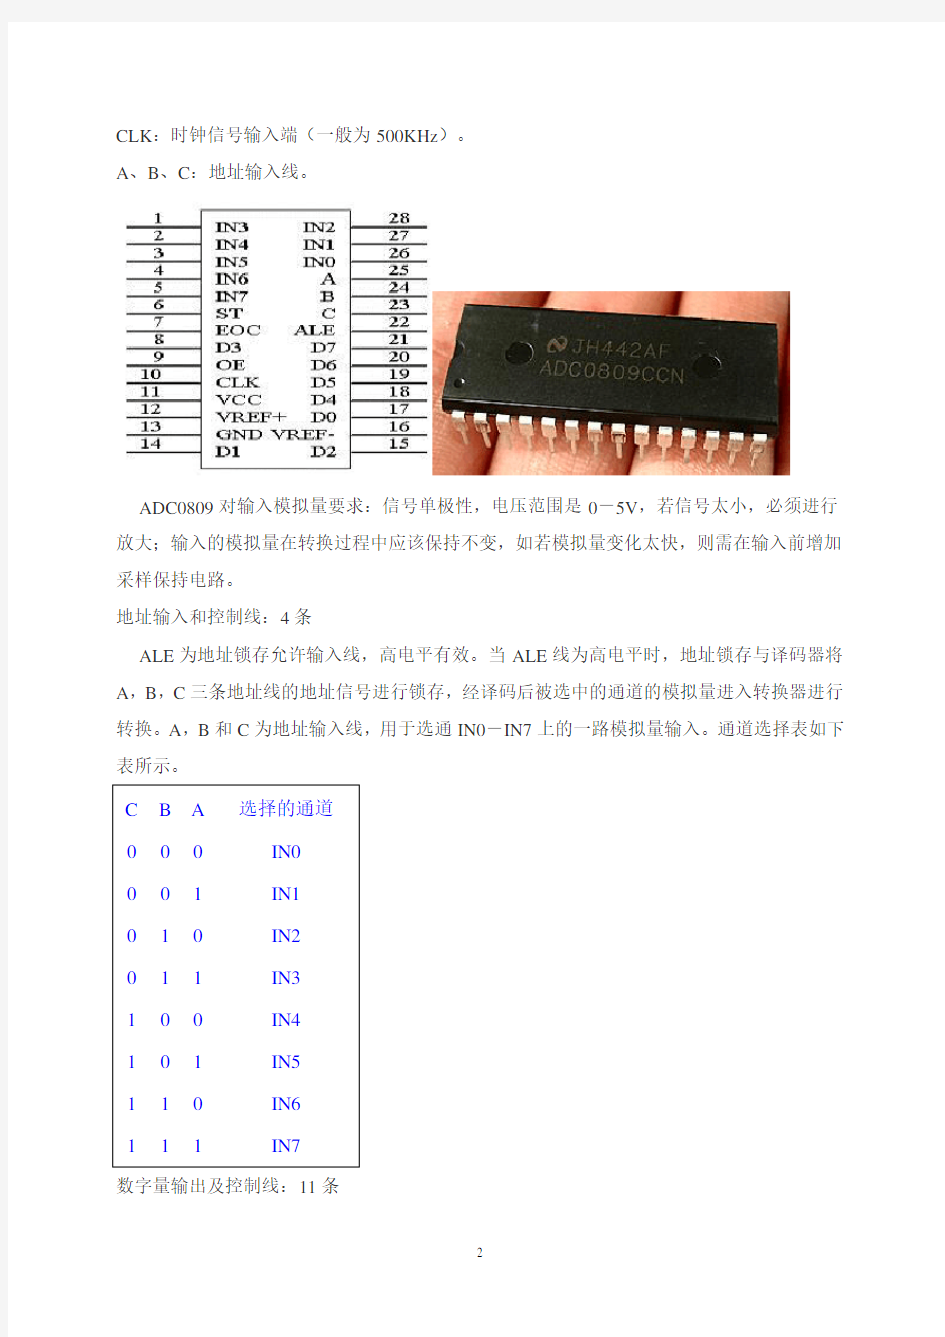 ADC0809中文资料